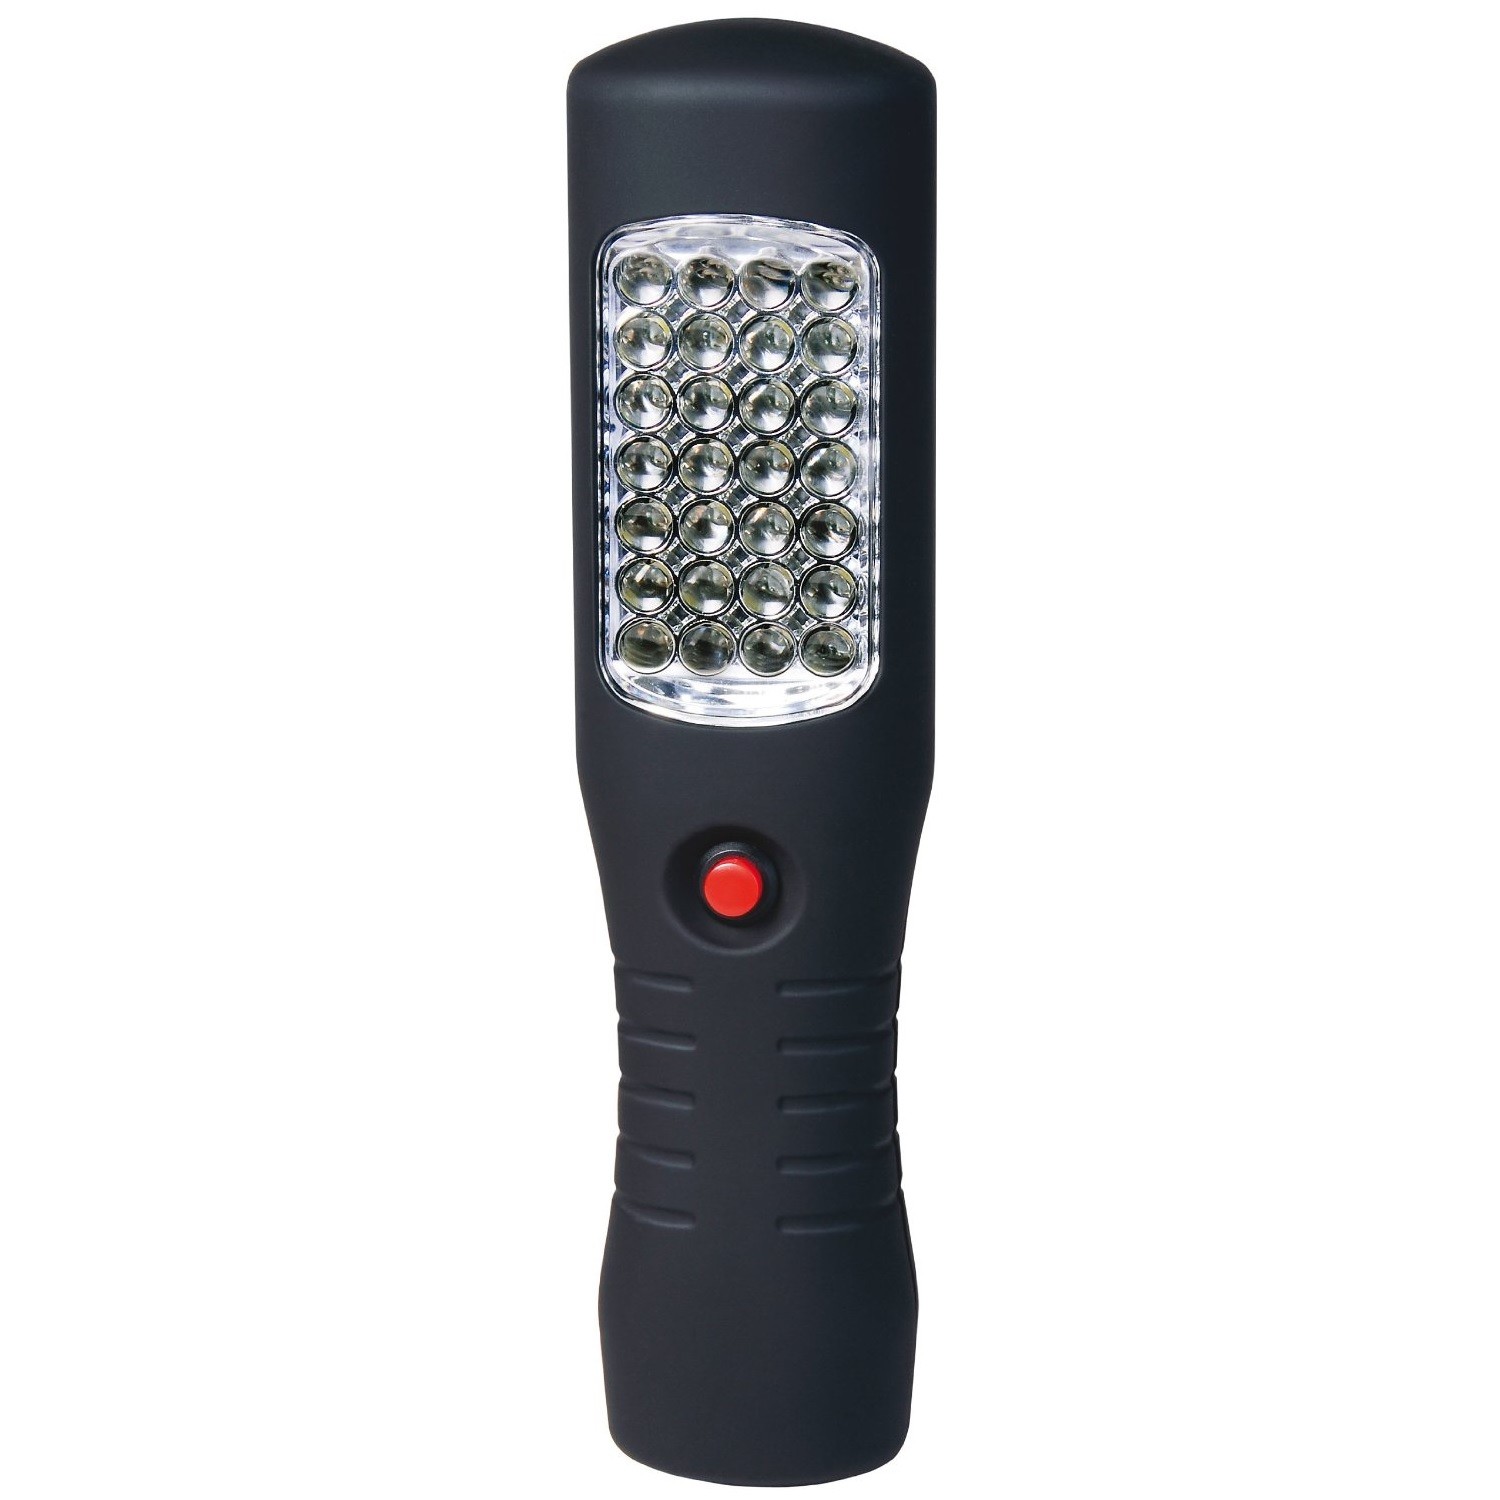 Brennenstuhl 28 LED Rechargeable Hand Lamp Inspection Light Torch 1175343 – New Stock